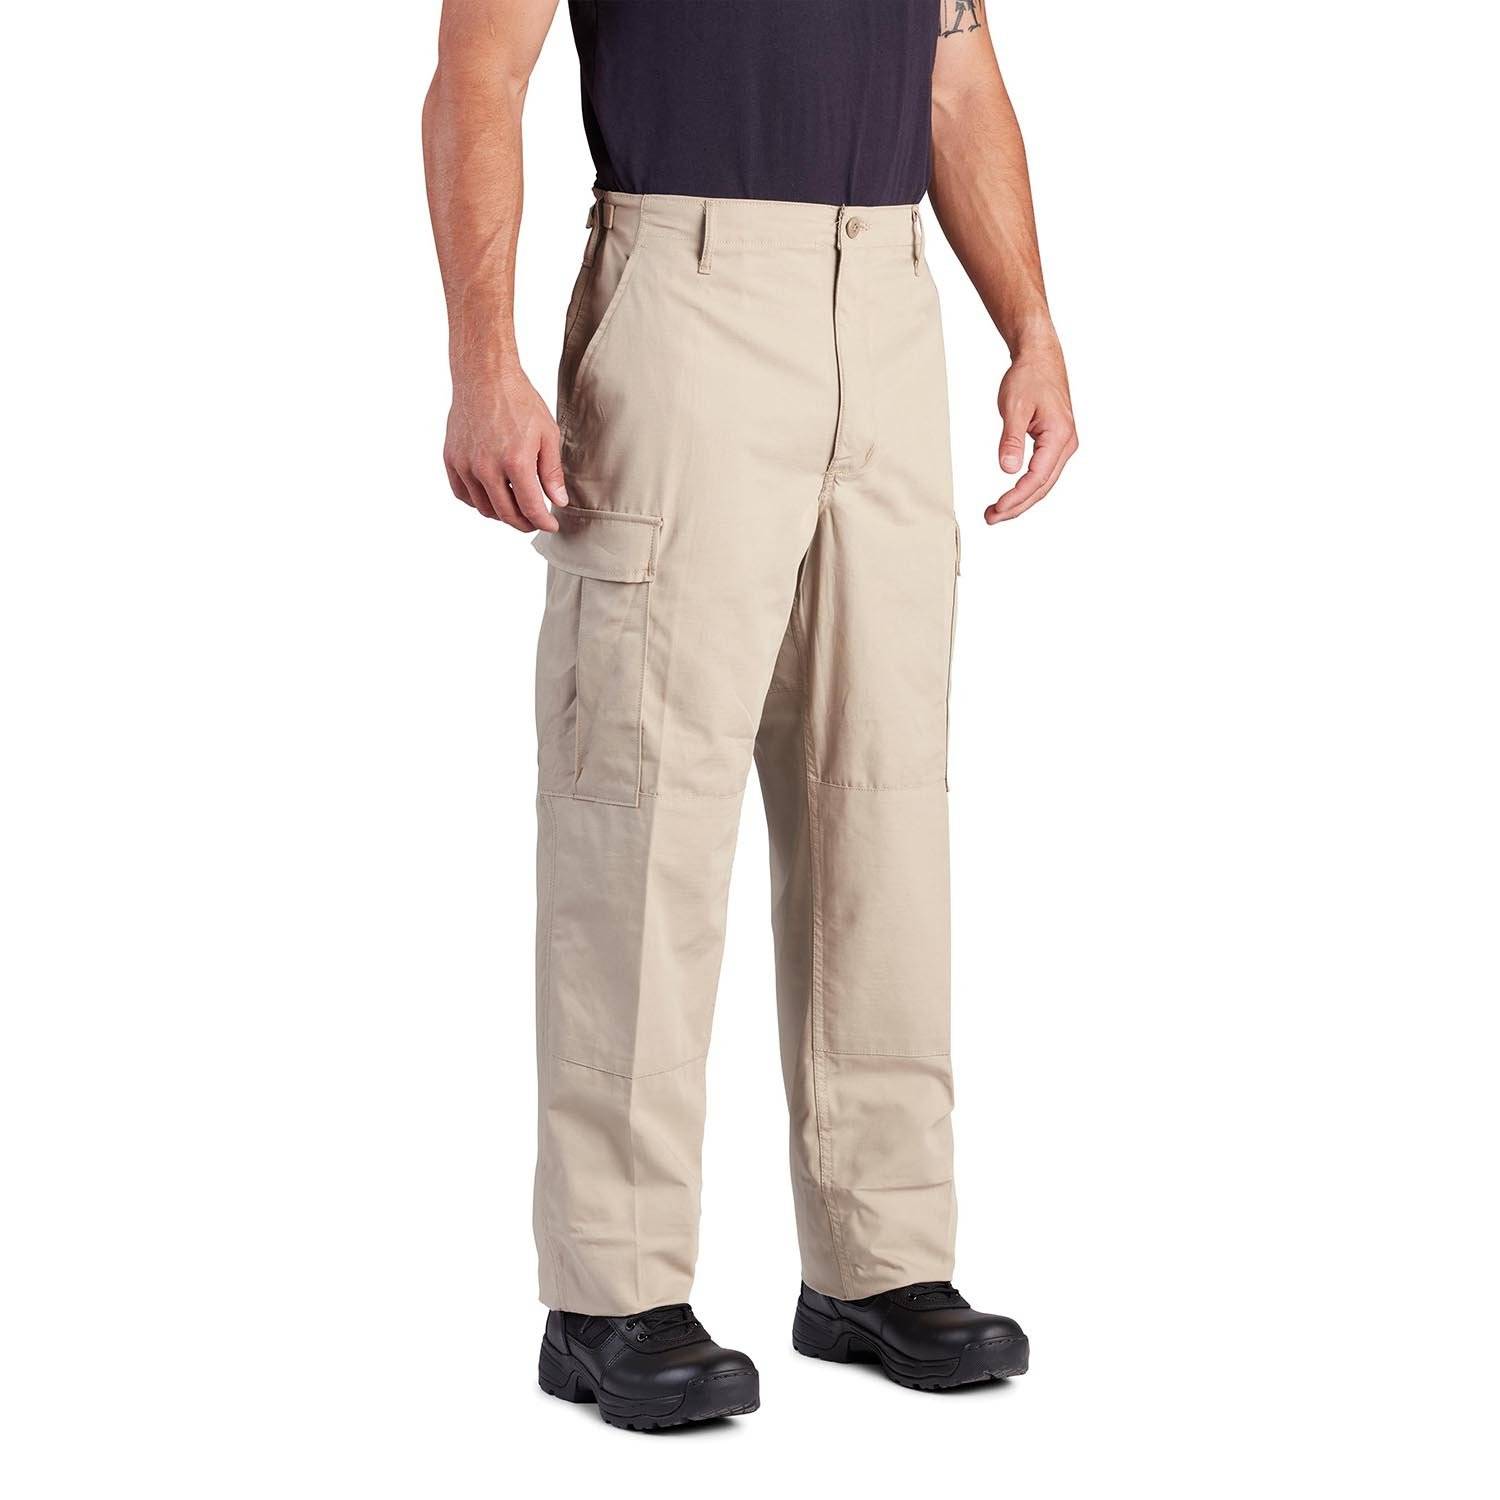 Propper Ripstop BDU Uniform Trousers.